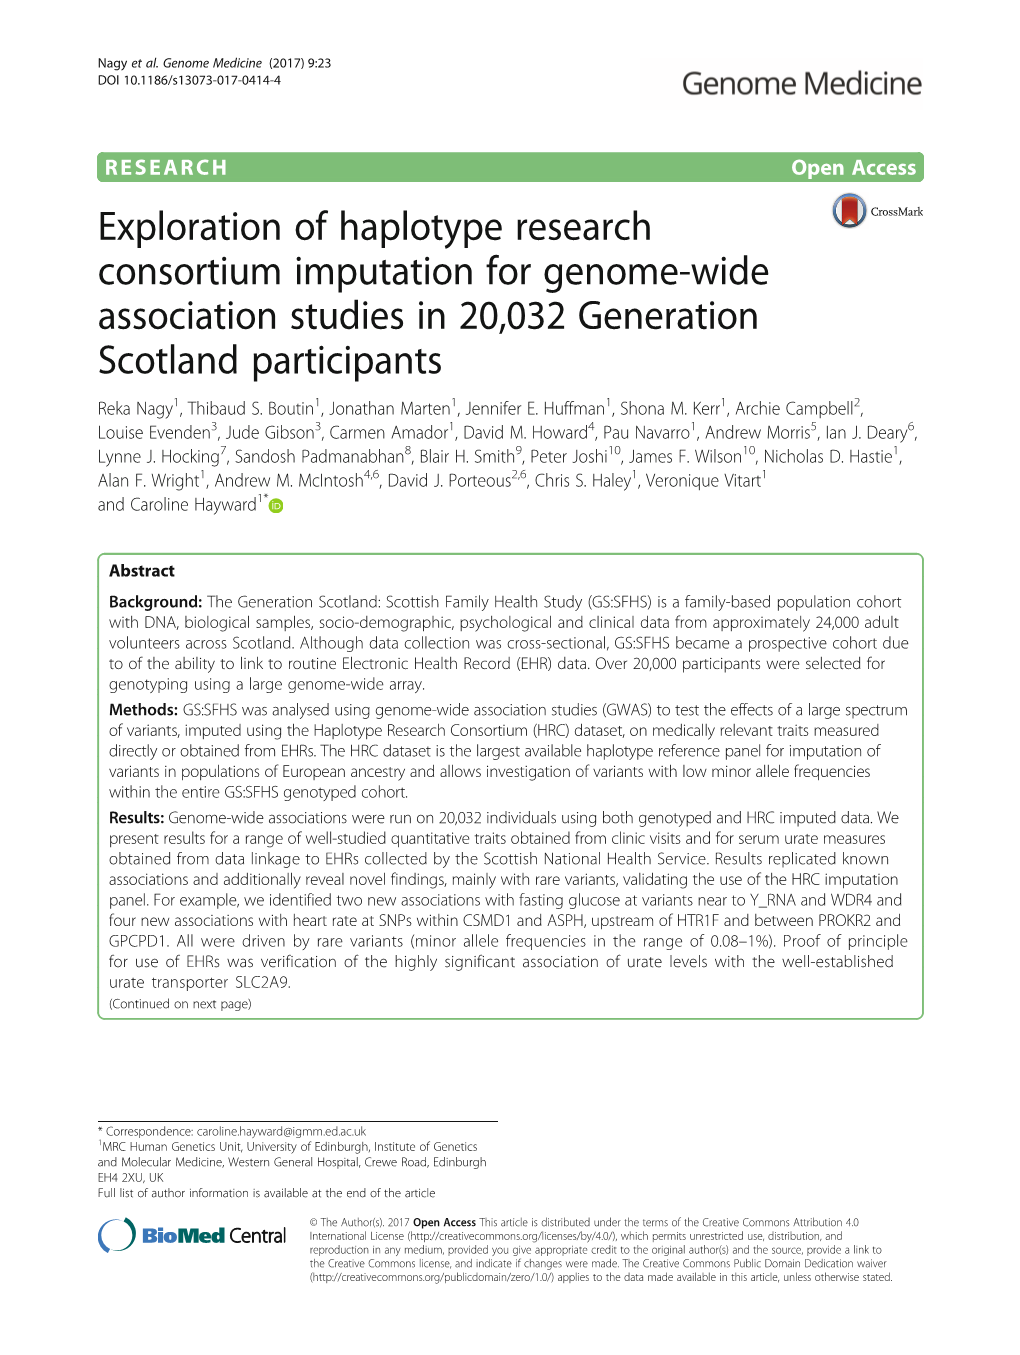 Exploration of Haplotype Research Consortium Imputation for Genome-Wide Association Studies in 20,032 Generation Scotland Participants Reka Nagy1, Thibaud S